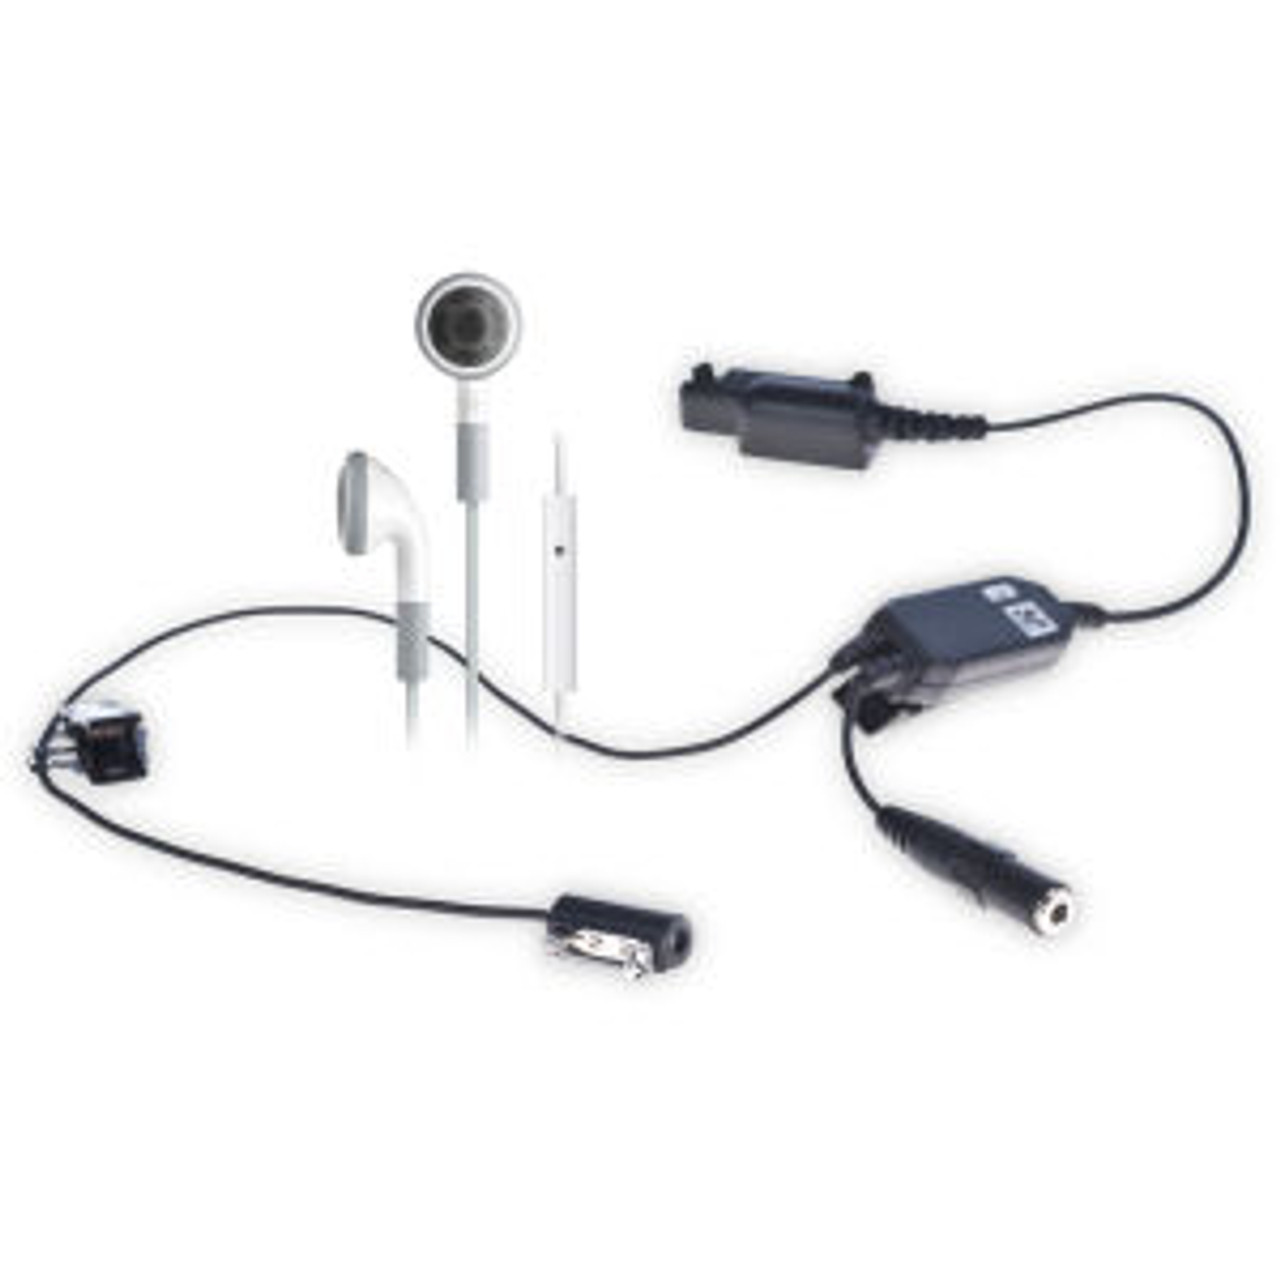 Relm RPU516 3-Wire/3.5mm Female Surveillance Kit With WIreless PTT